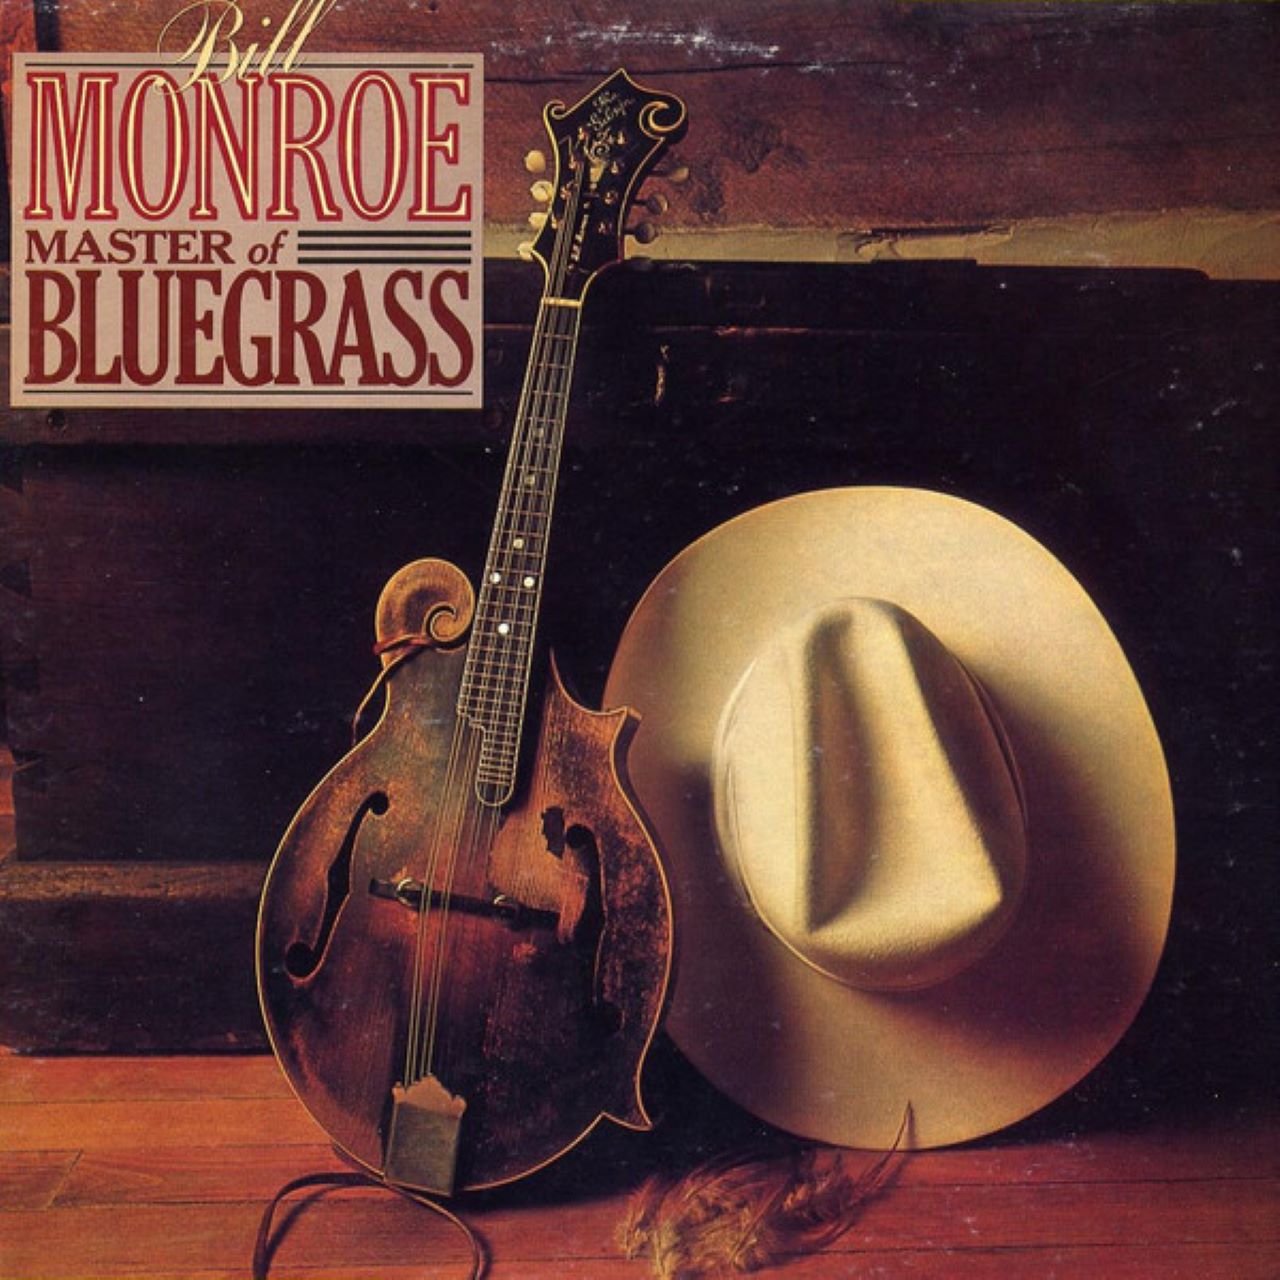 Bill Monroe - Master Of Bluegrass cover album